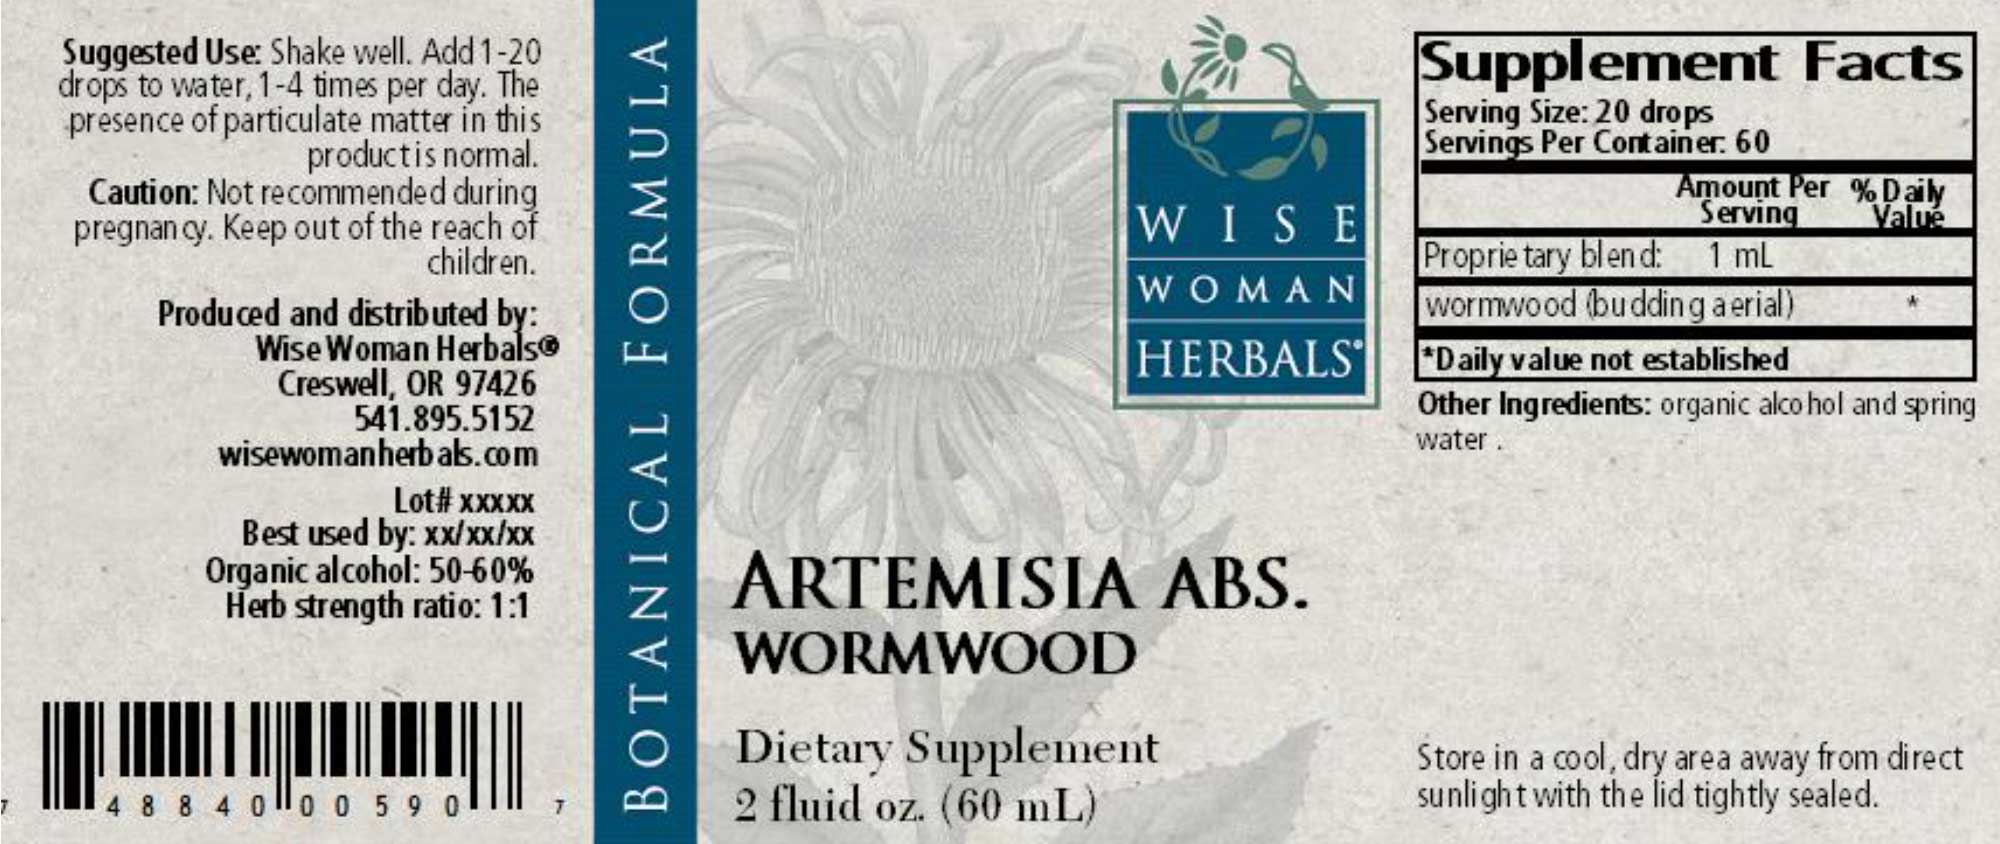 Wise Woman Herbals Artemisia Absinthium Wormwood Label